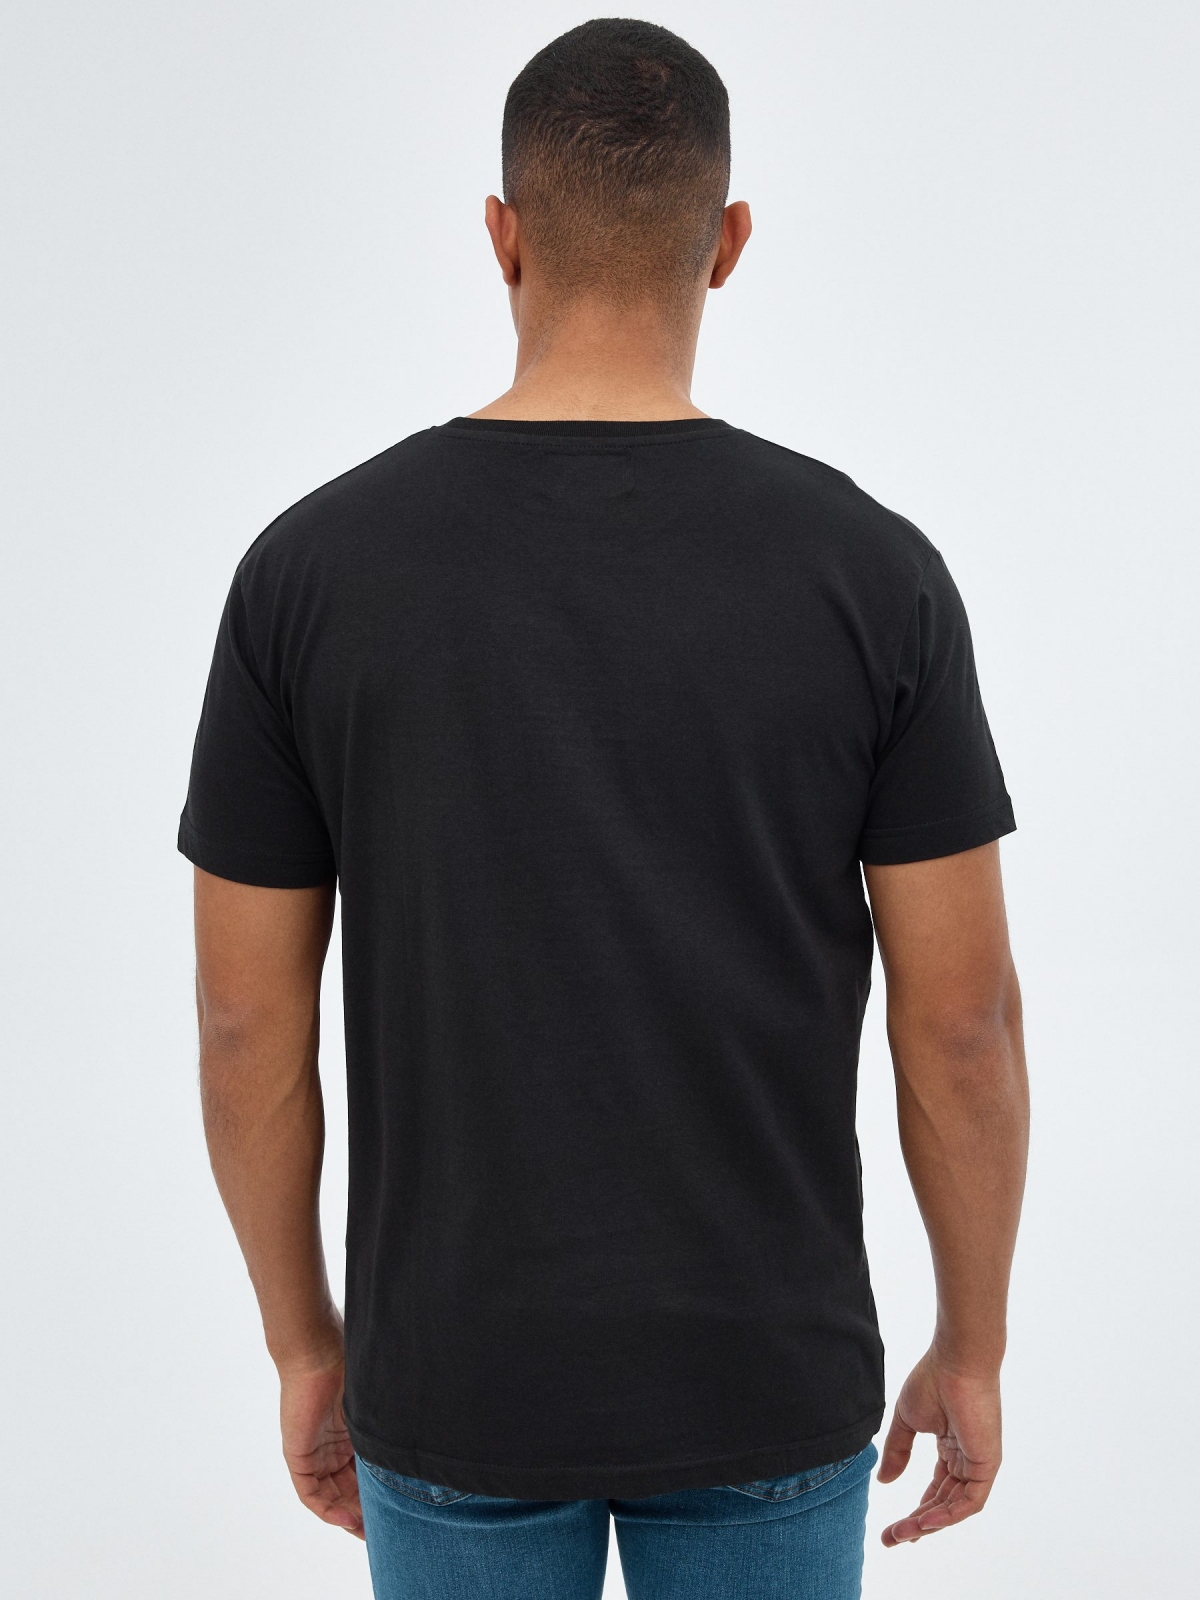 T-shirt Metaverse preto vista meia traseira